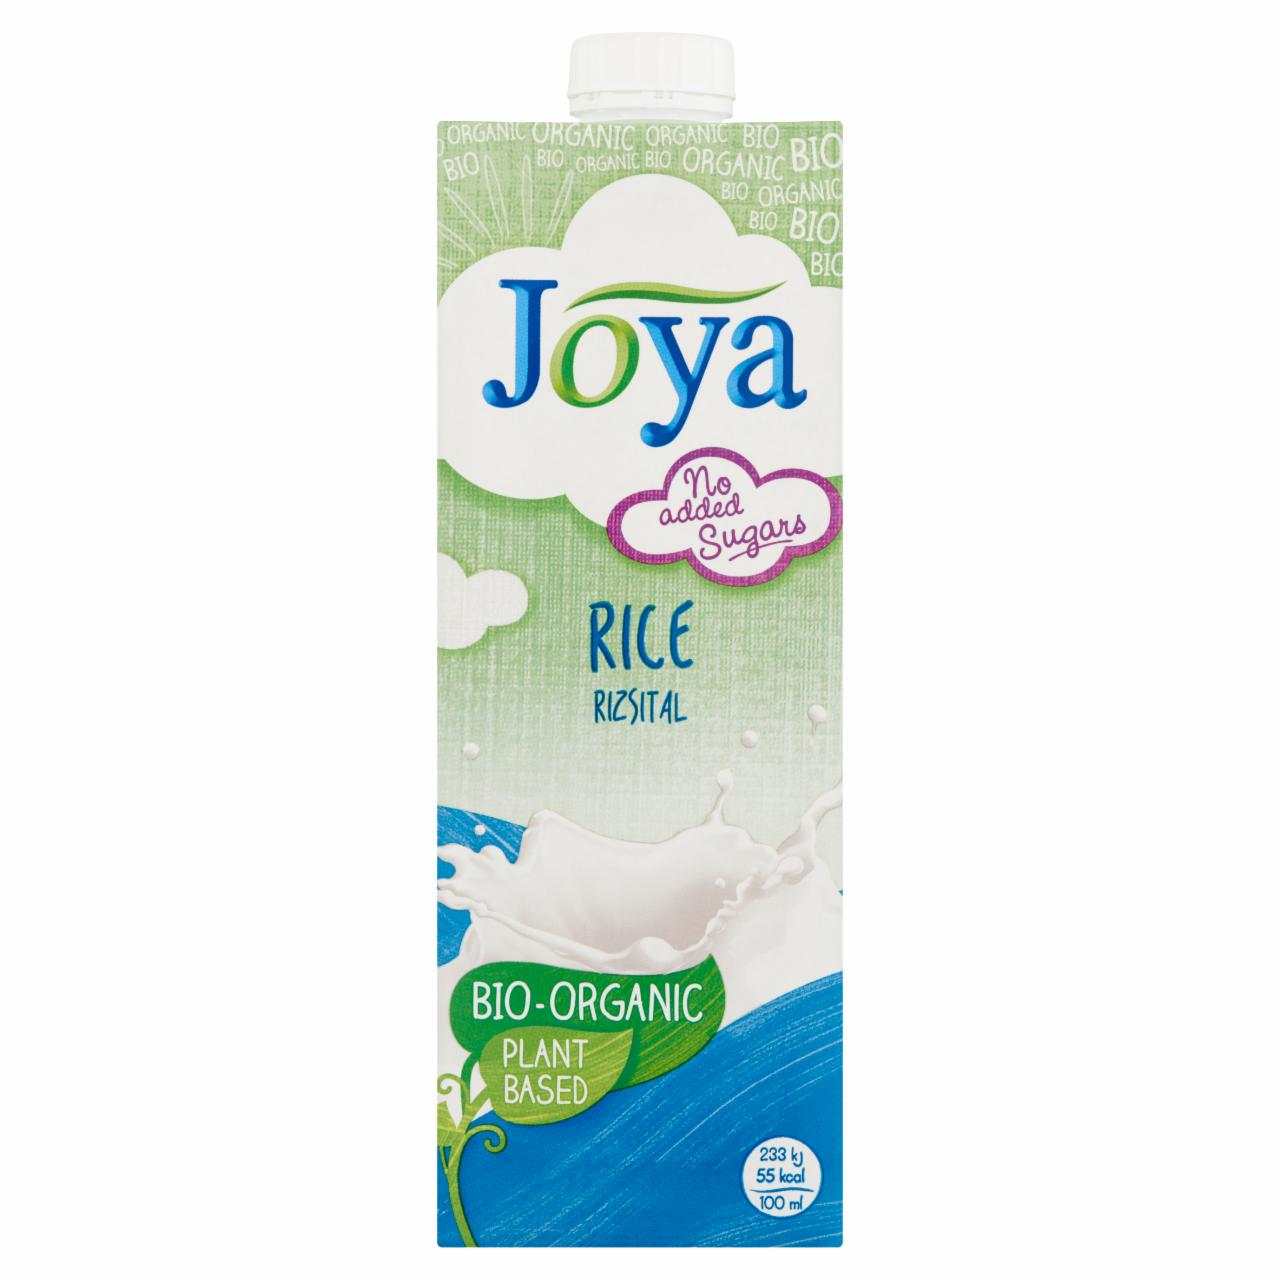 Képek - Joya bio UHT rizsital 1 l